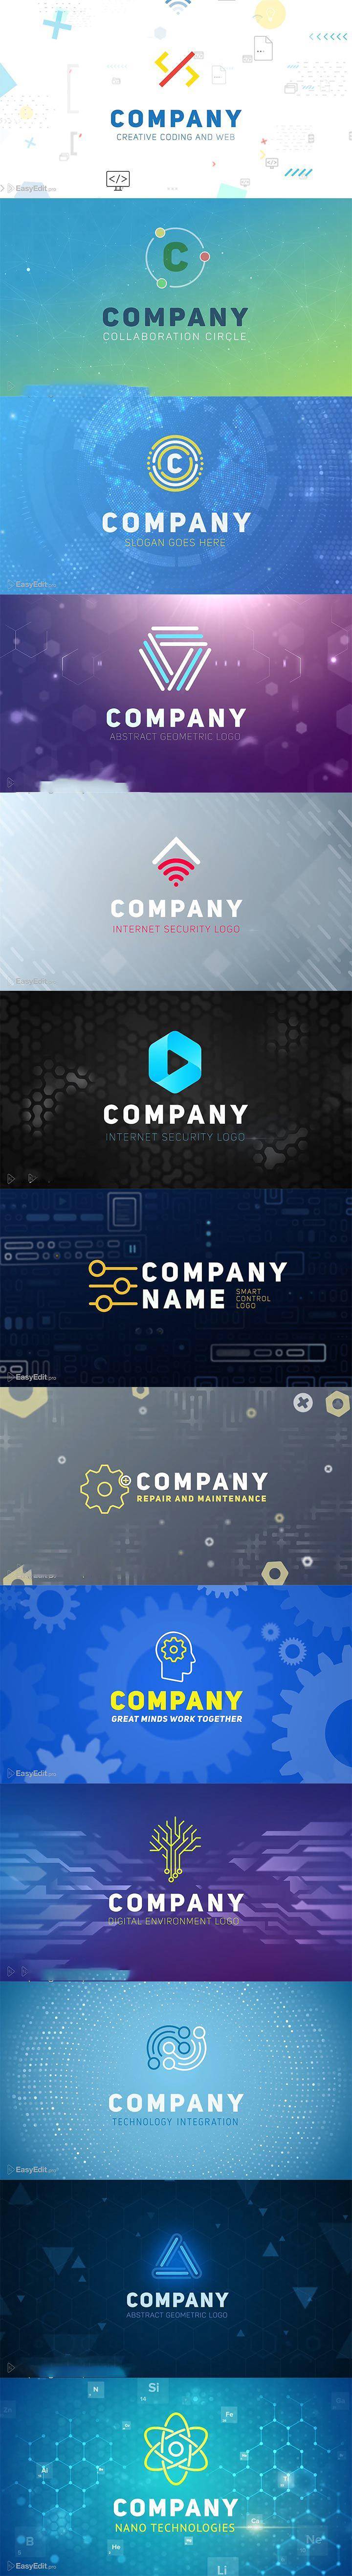 AE模板工具包 高科技背景公司企业Logo片头包装AE源文件打包下载